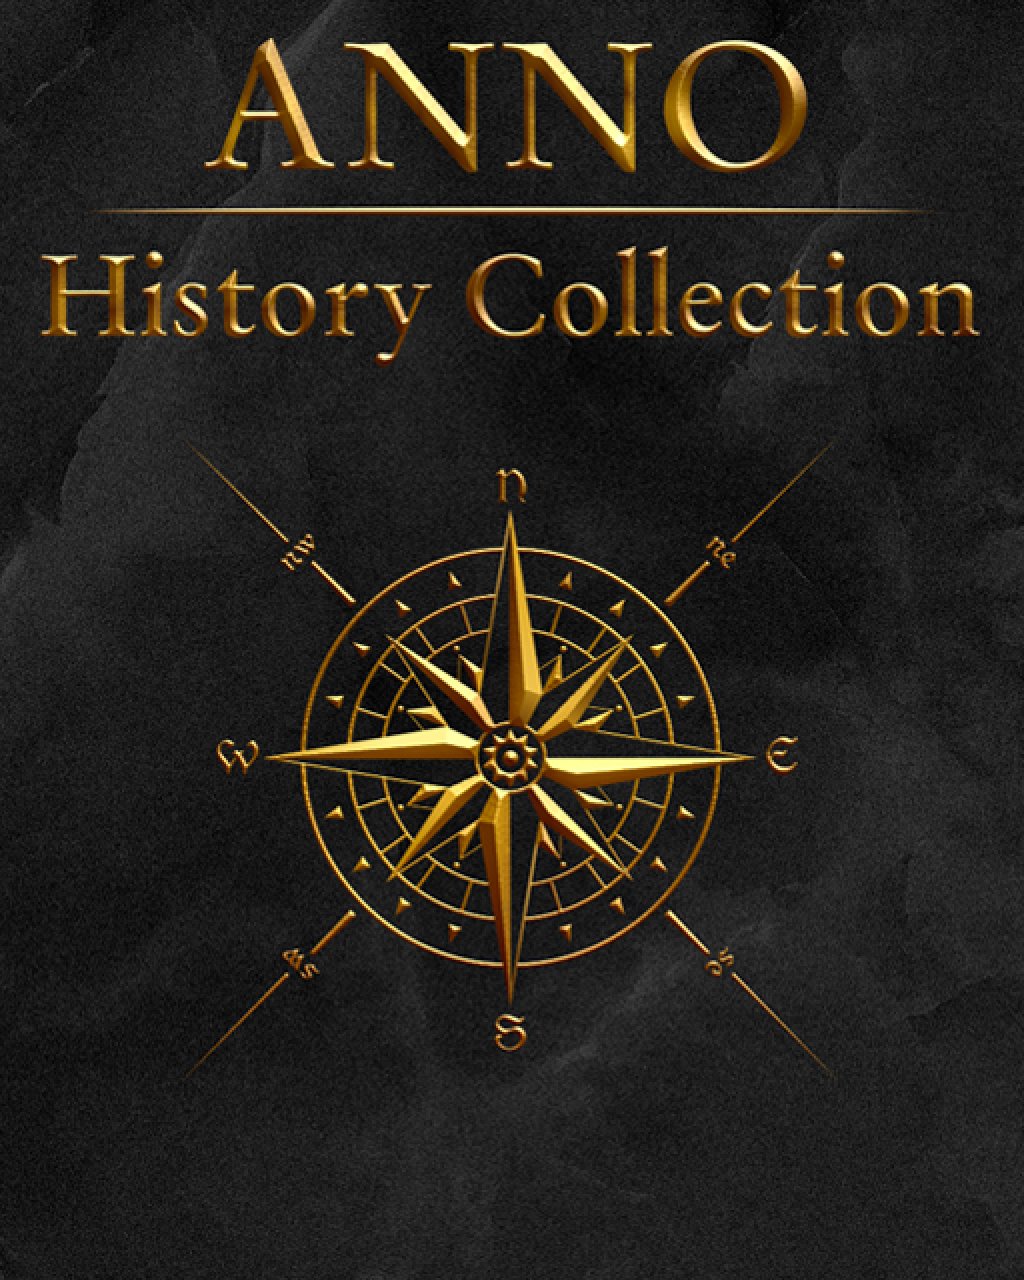 ESD Anno History Collection